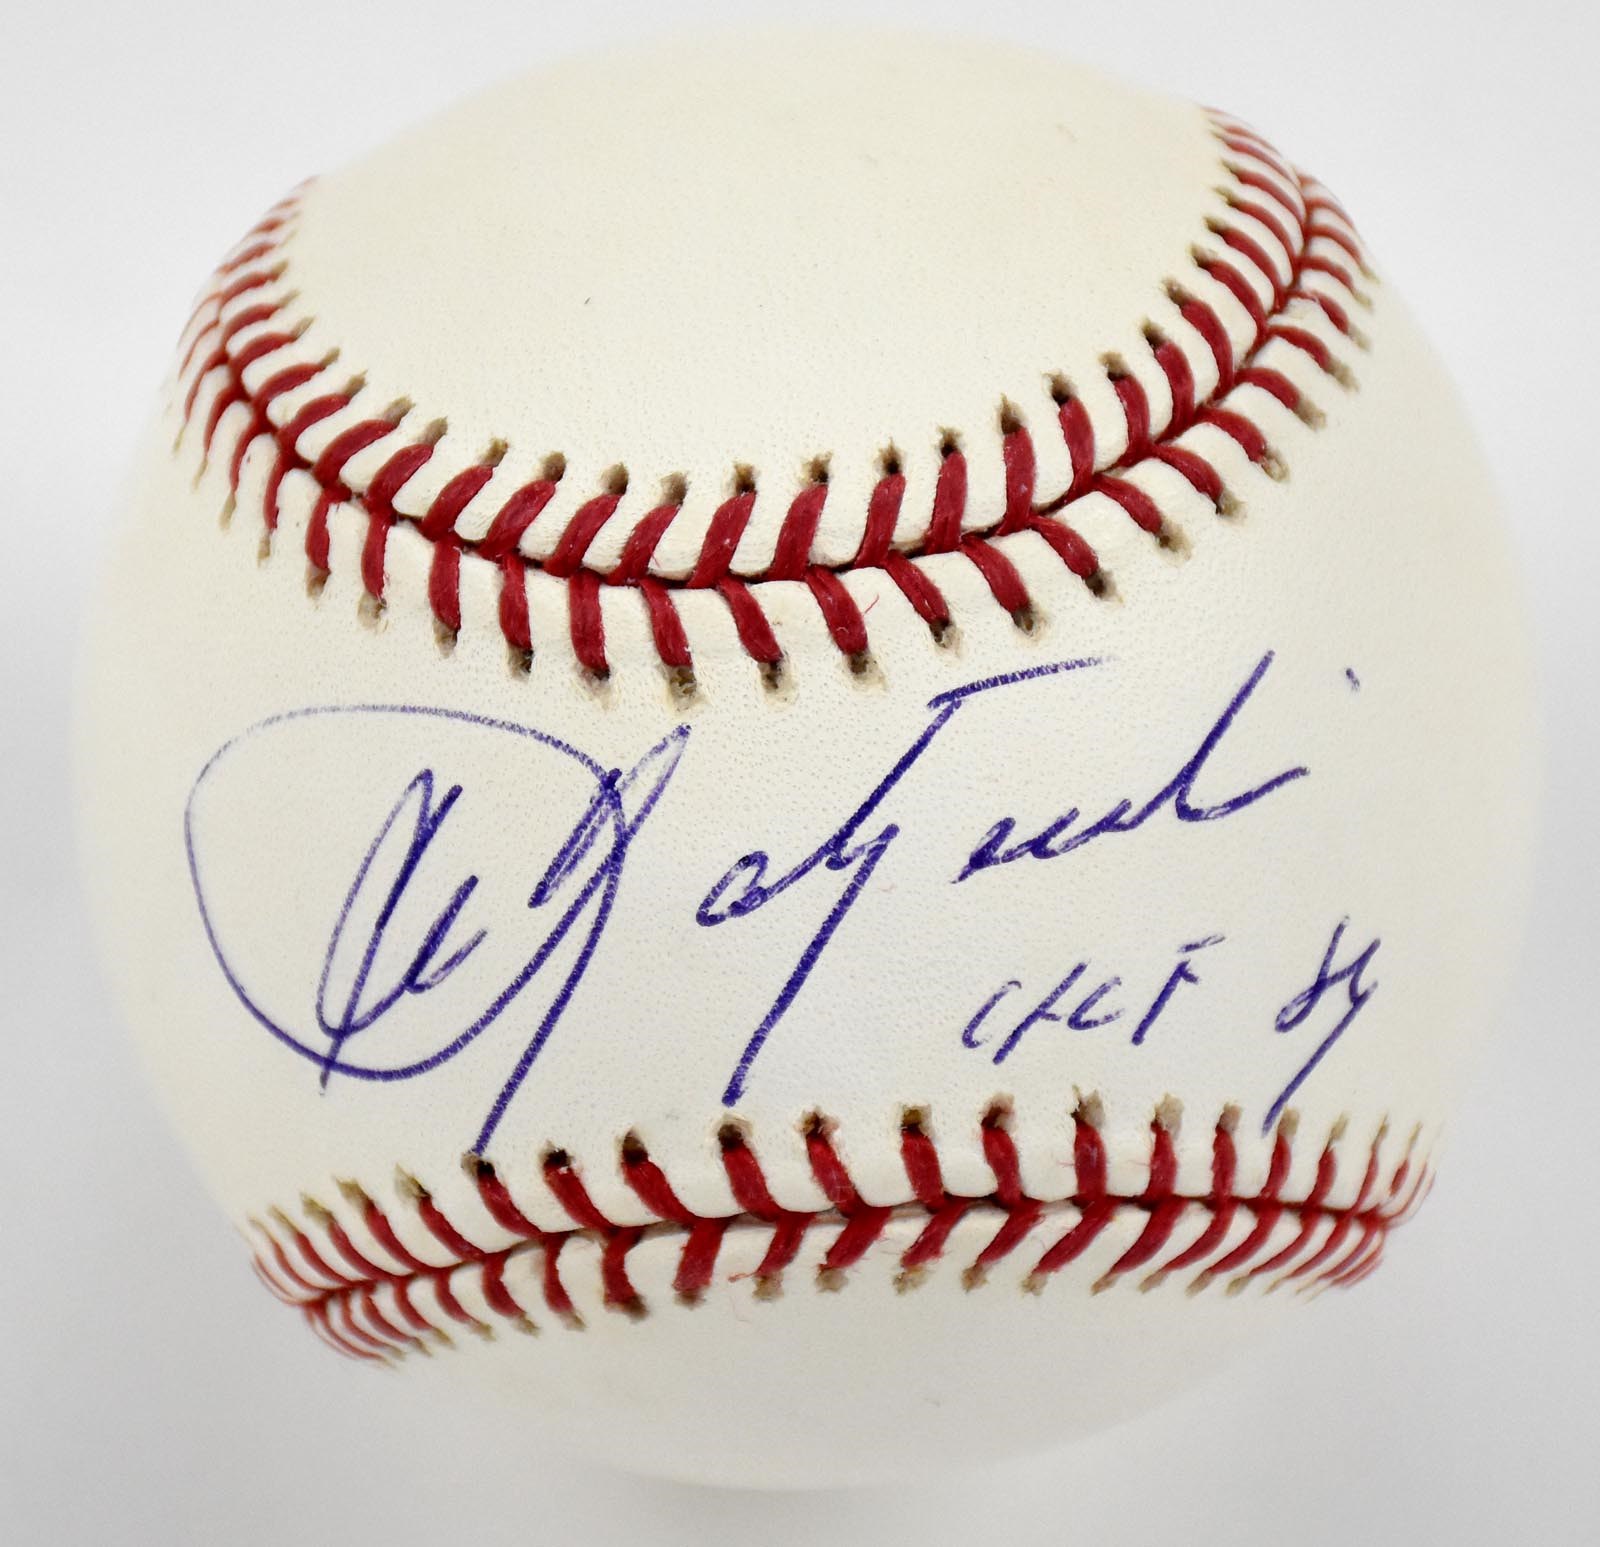 Baseball Autographs - Carl Yastrzemski "HOF 89" Single Signed Baseball (Steiner)